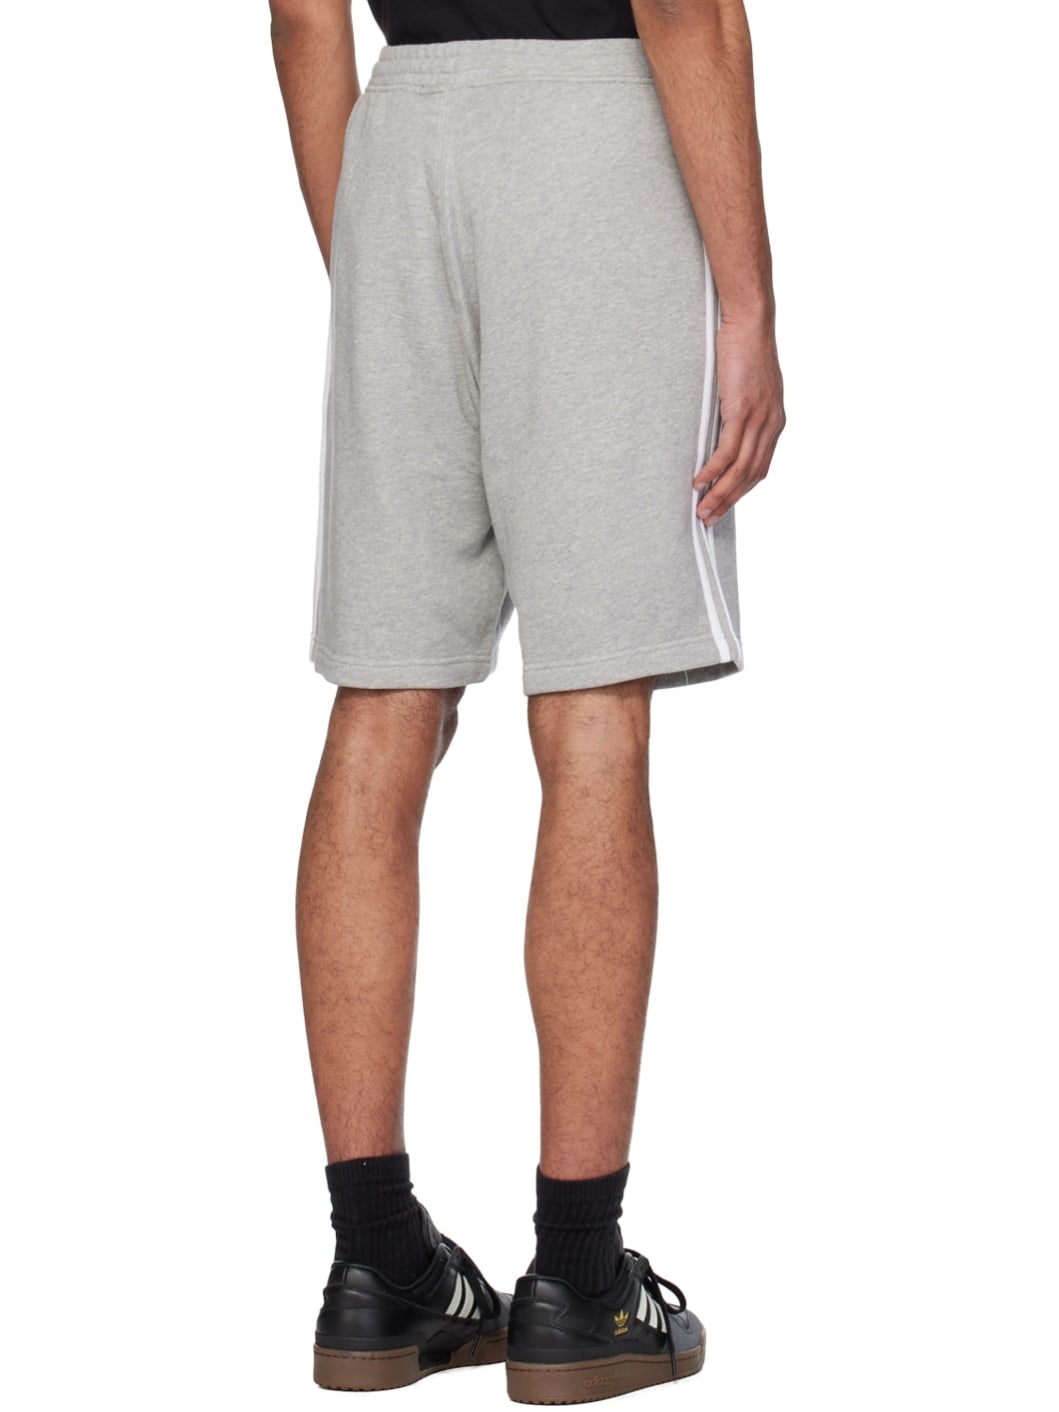 Gray 3-Stripes Shorts - 3